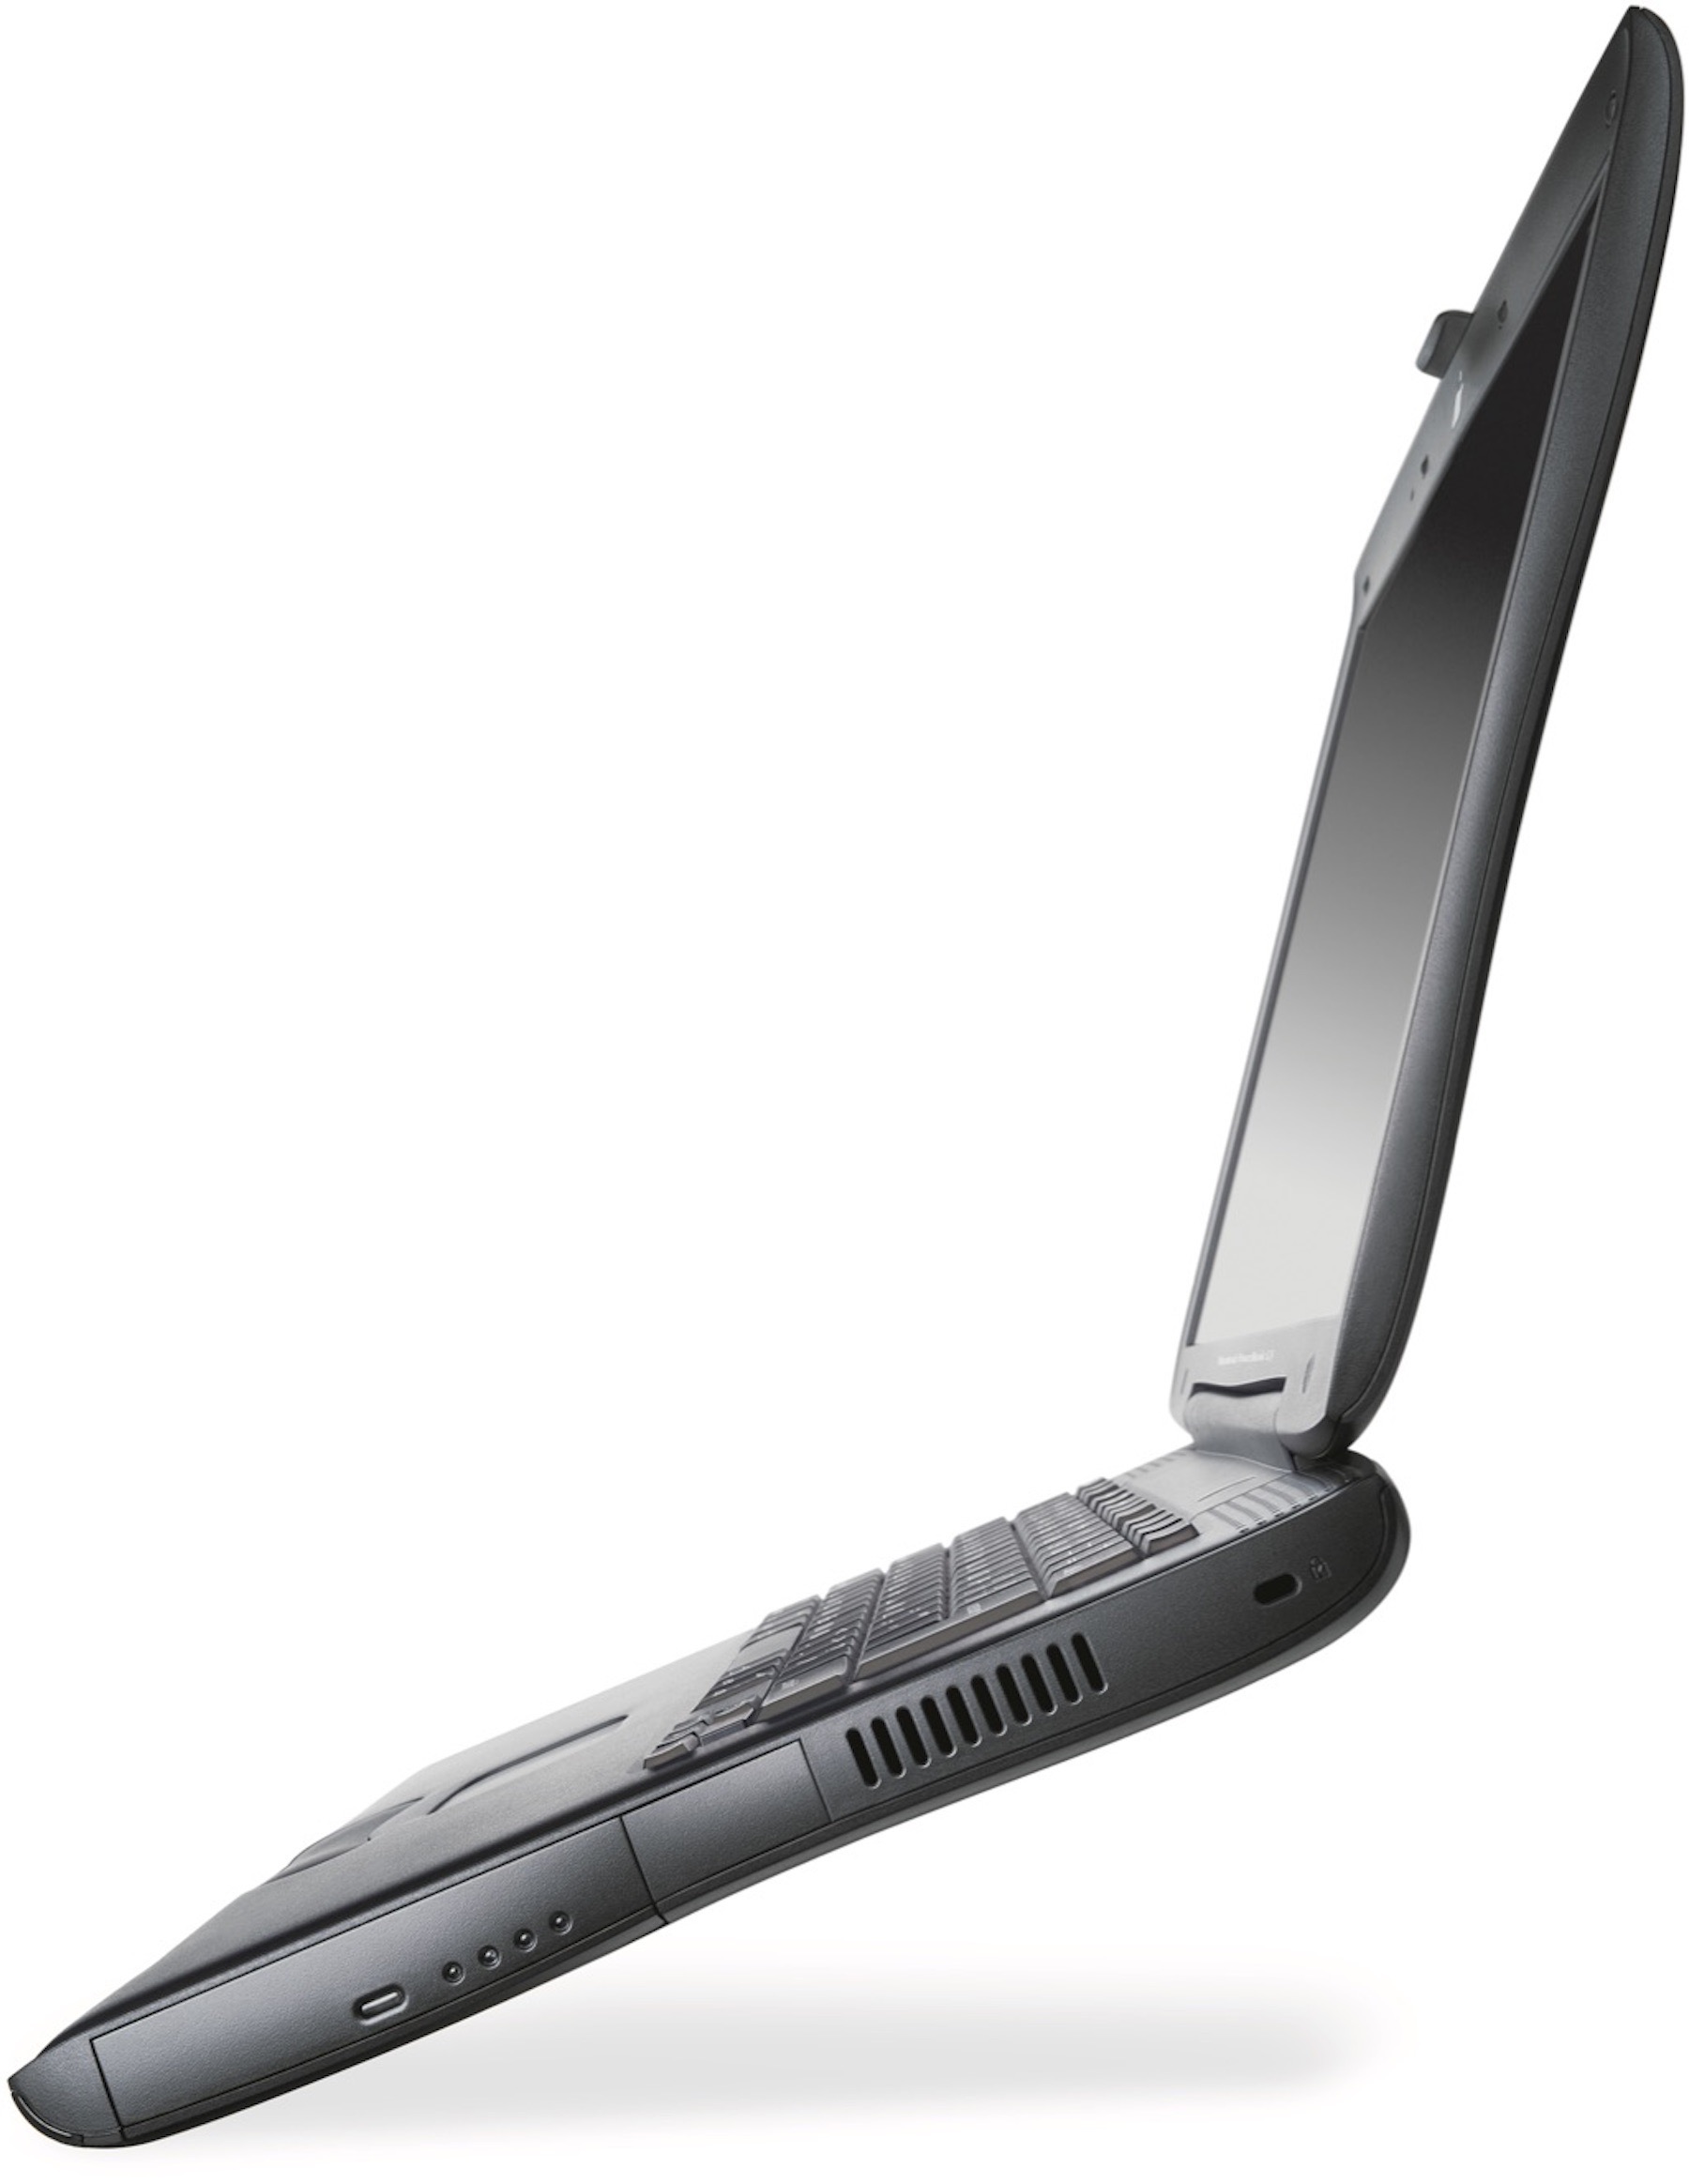 The Lombard PowerBook G3 (Bronze Keyboard) – 512 Pixels